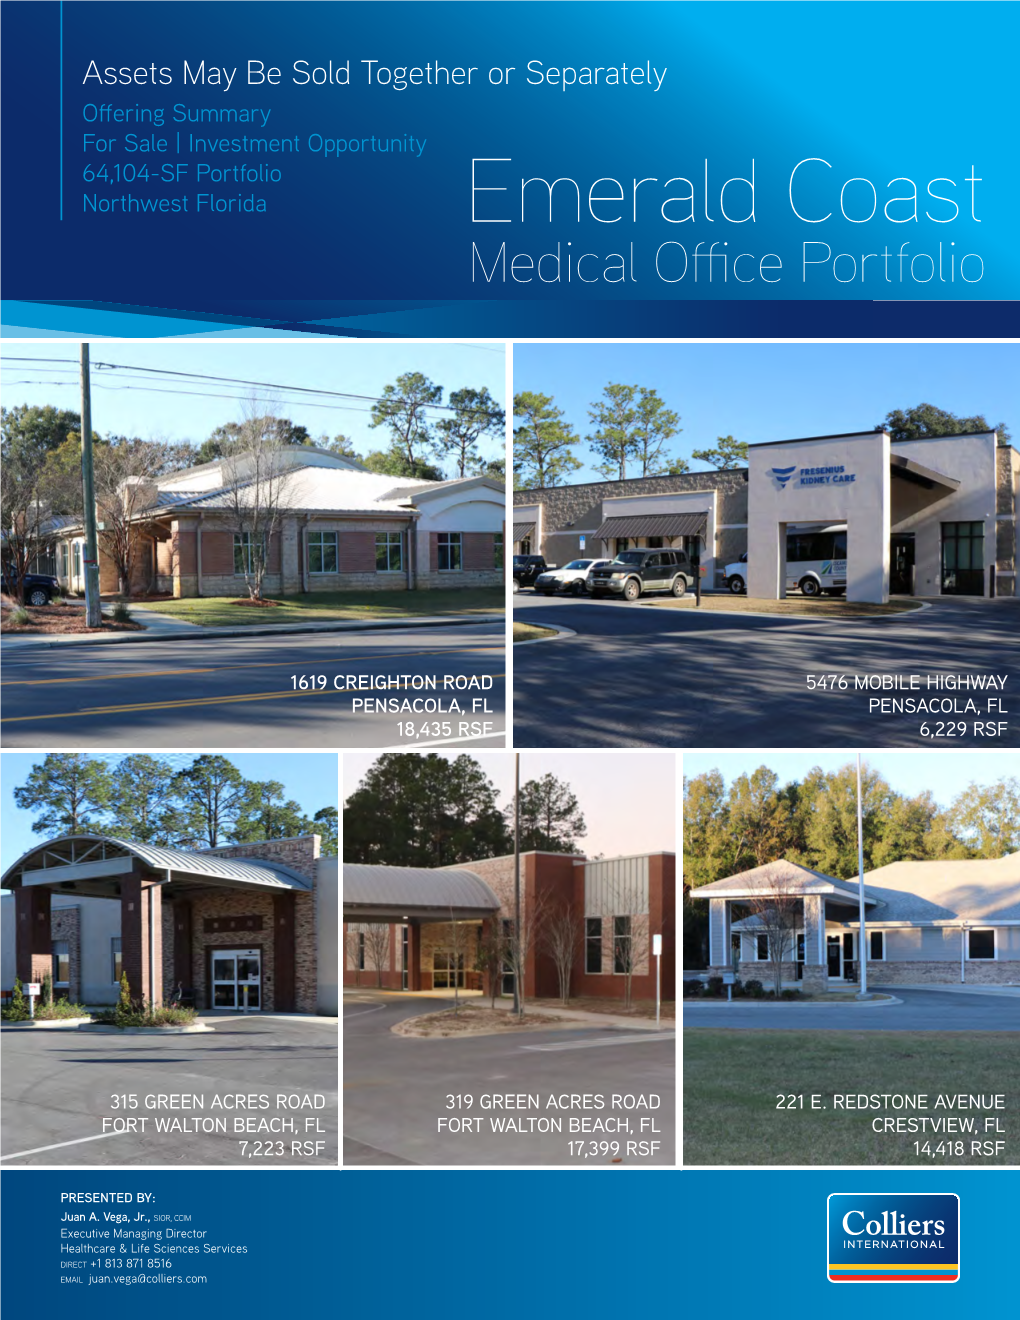 Emerald Coast Medical Office Portfolio